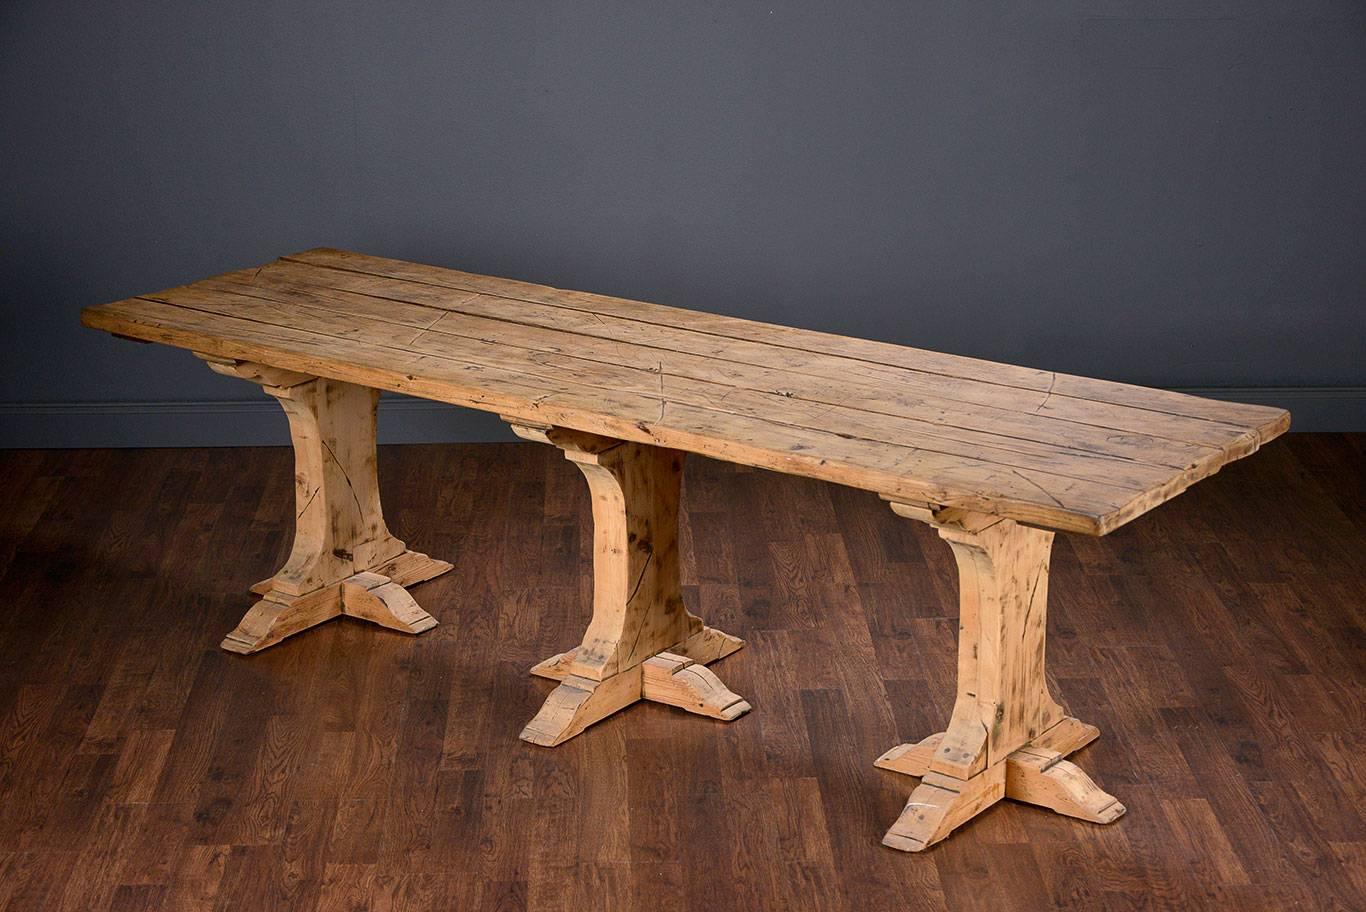 Antique Belgian light oak plank top dining table.
Neville, Belgium.